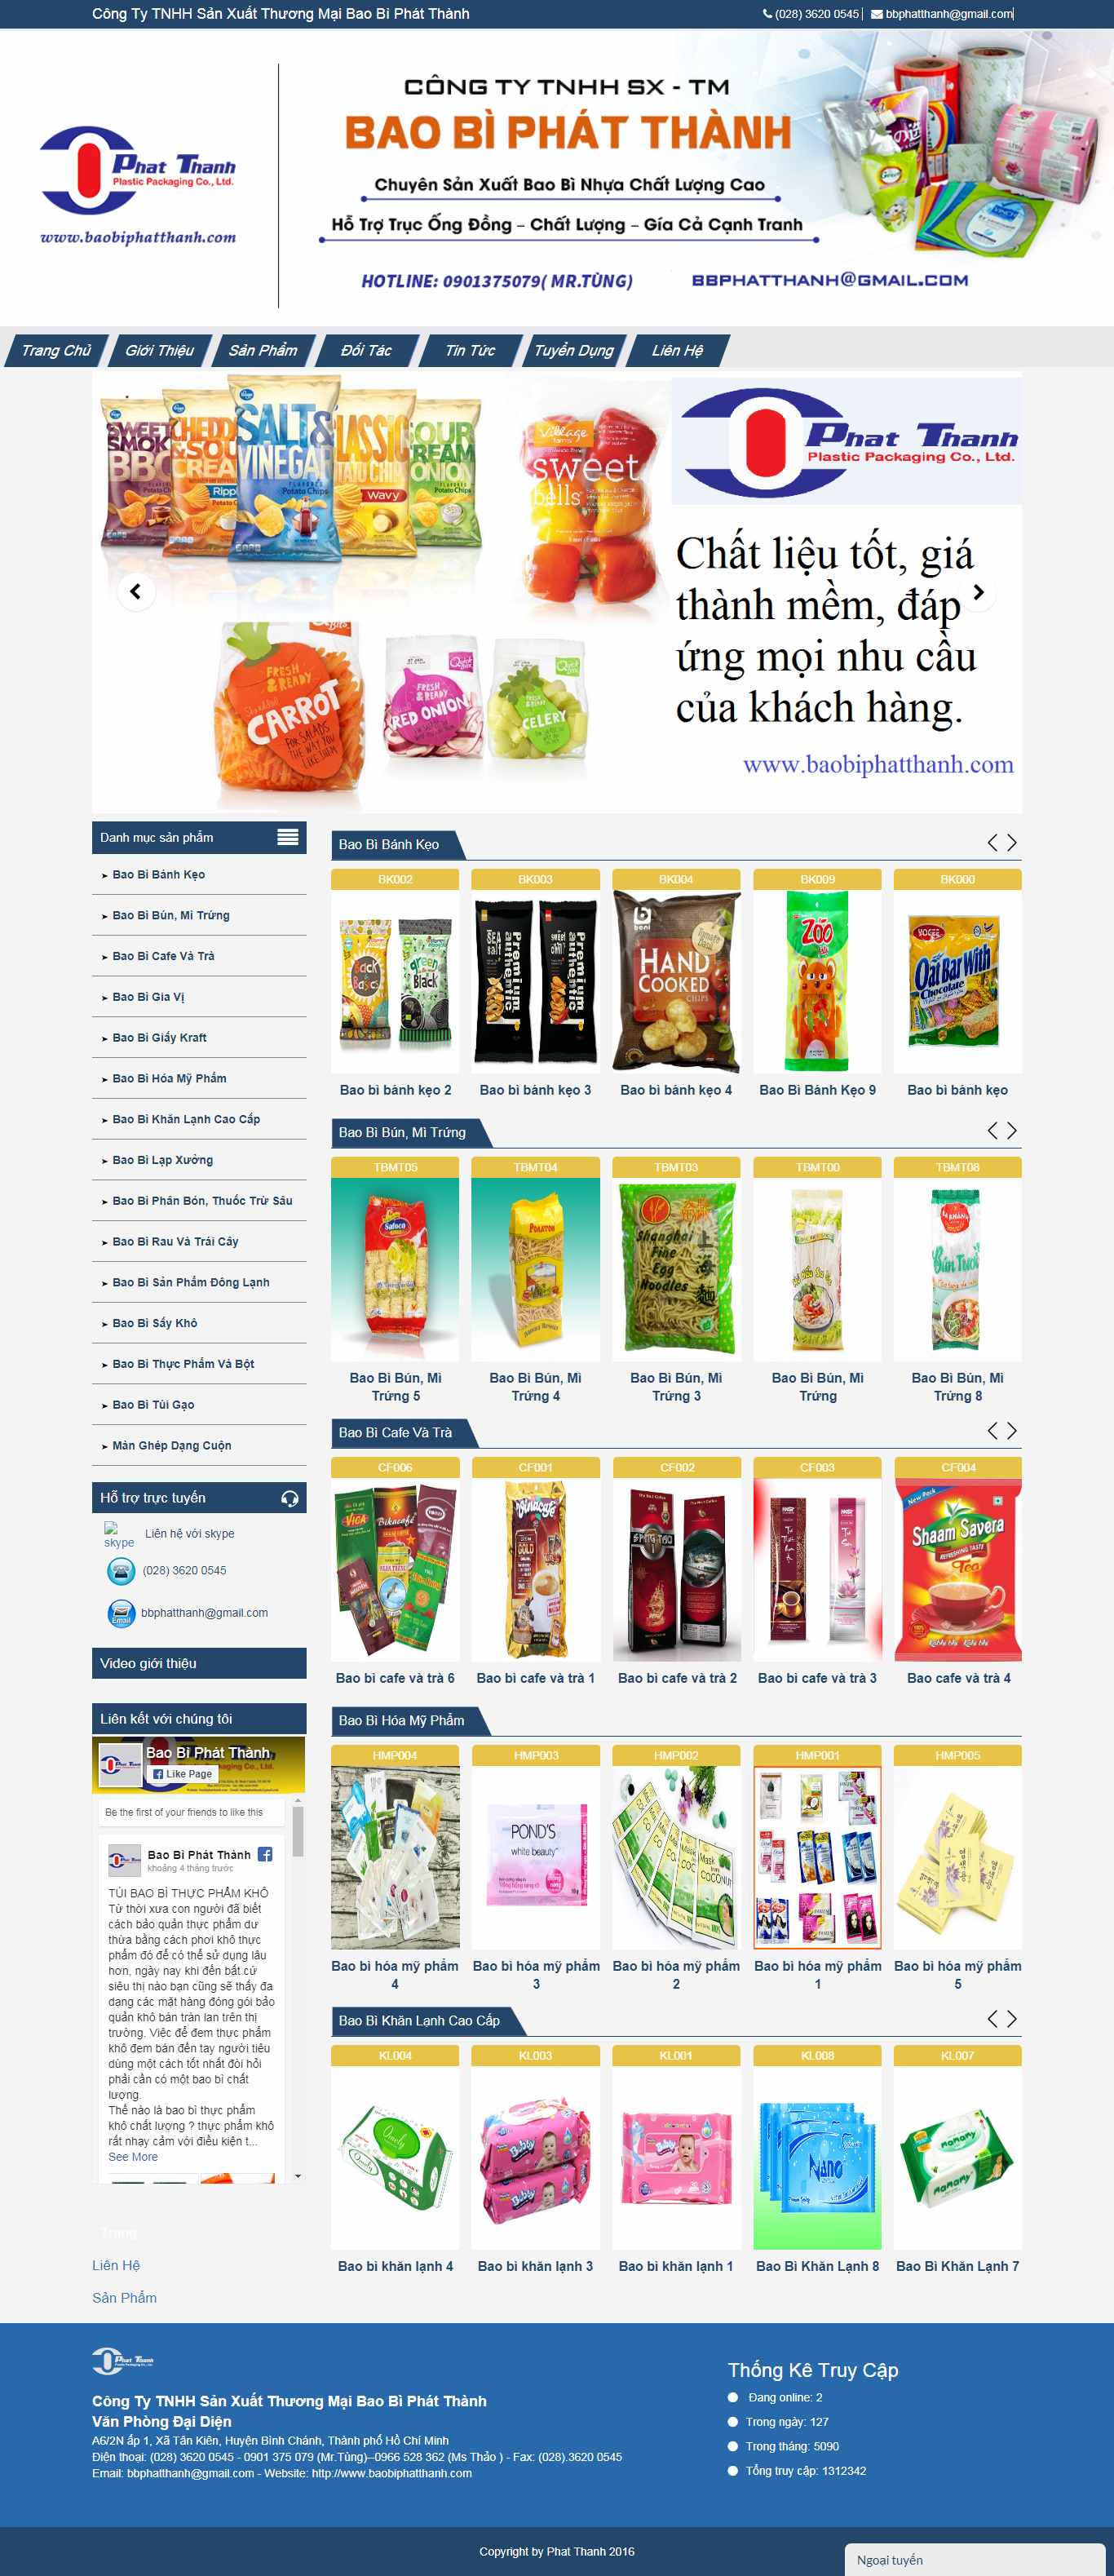 Thiết kế Website sản xuất bao bì - www.baobiphatthanh.com